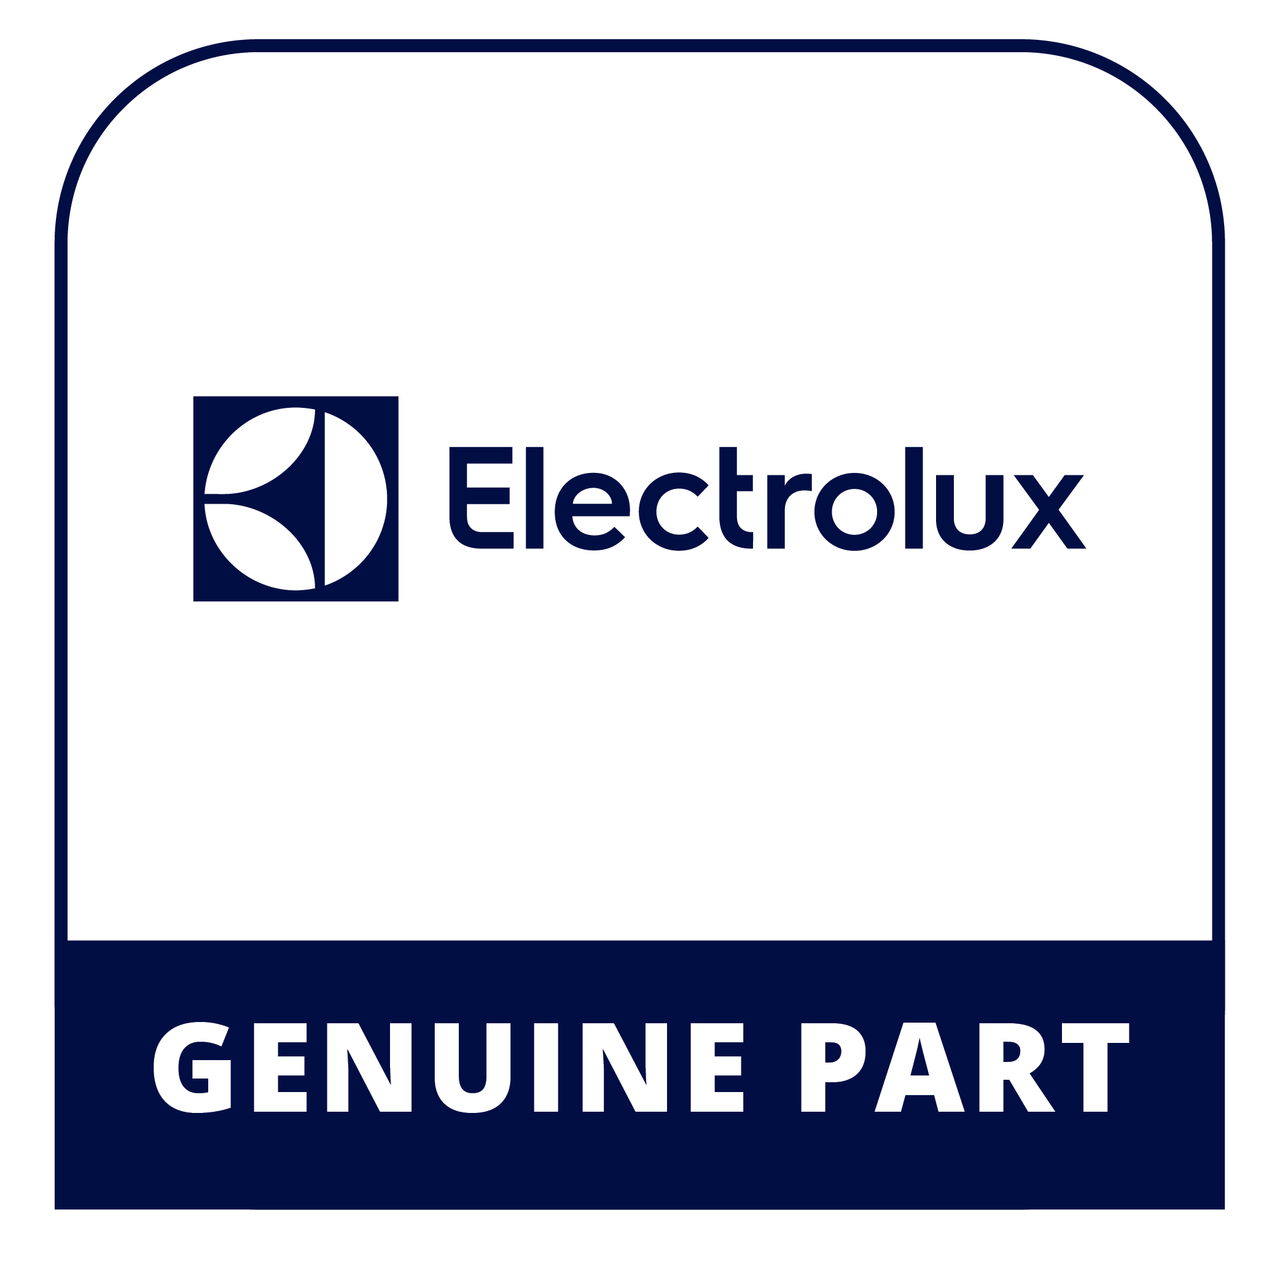 Frigidaire - Electrolux 316536611 Ignitor/Orifice Ass - Genuine Electrolux Part